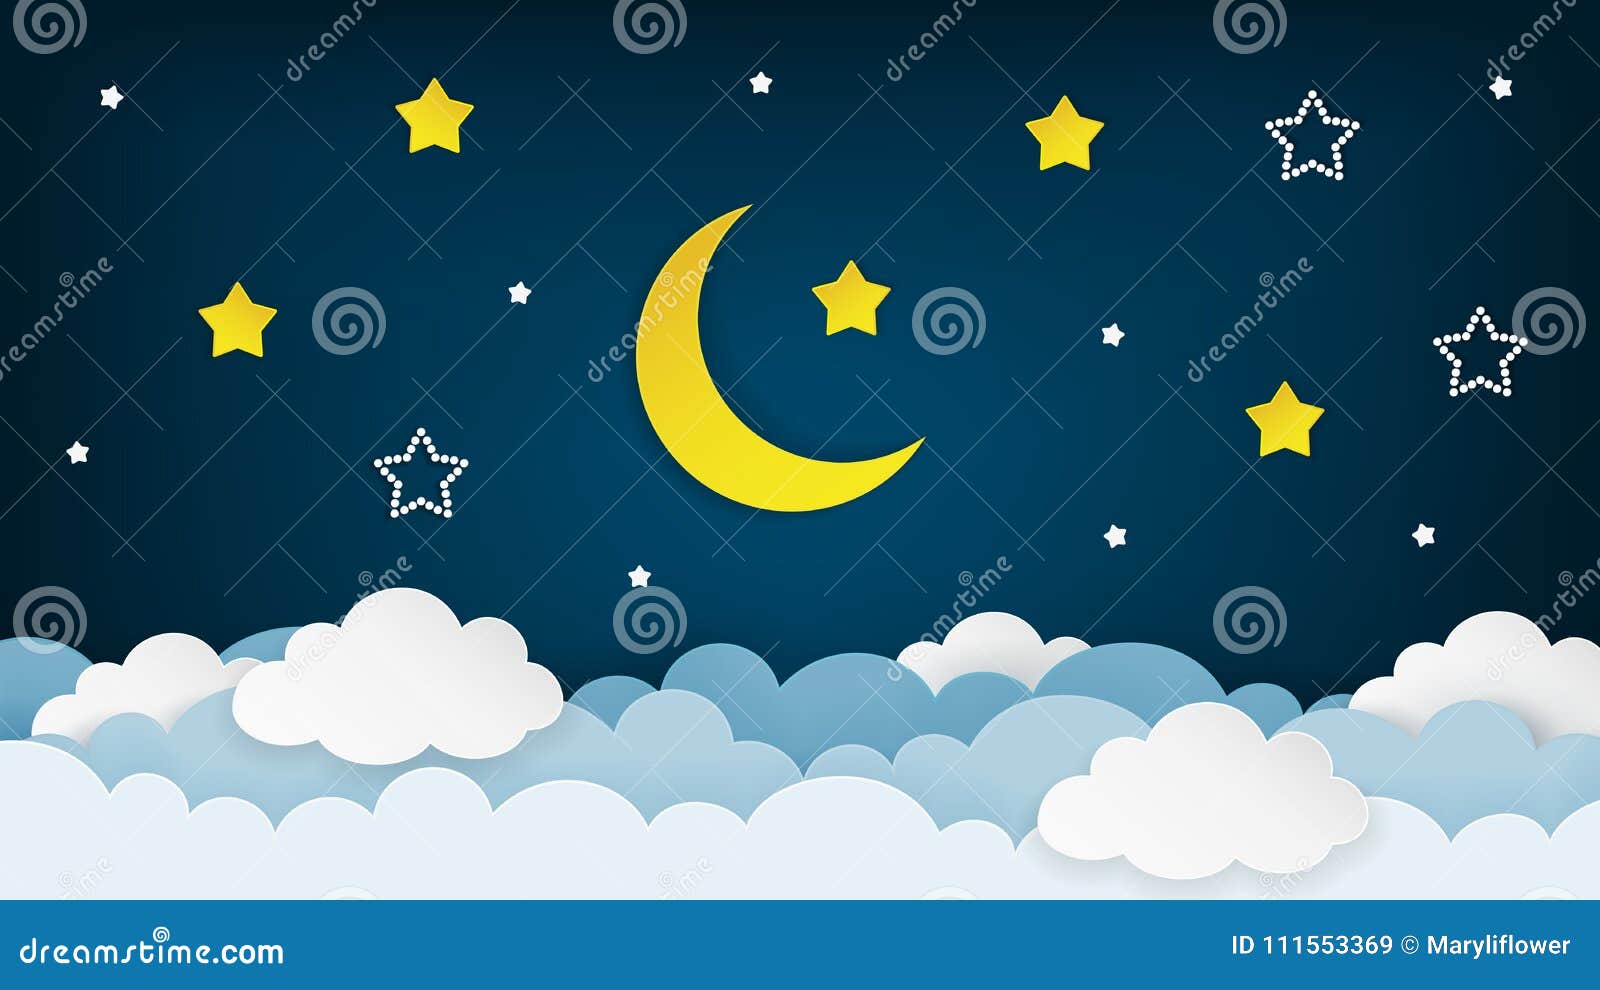 half moon, stars and clouds on the dark night sky background. paper art. night scene background.  .